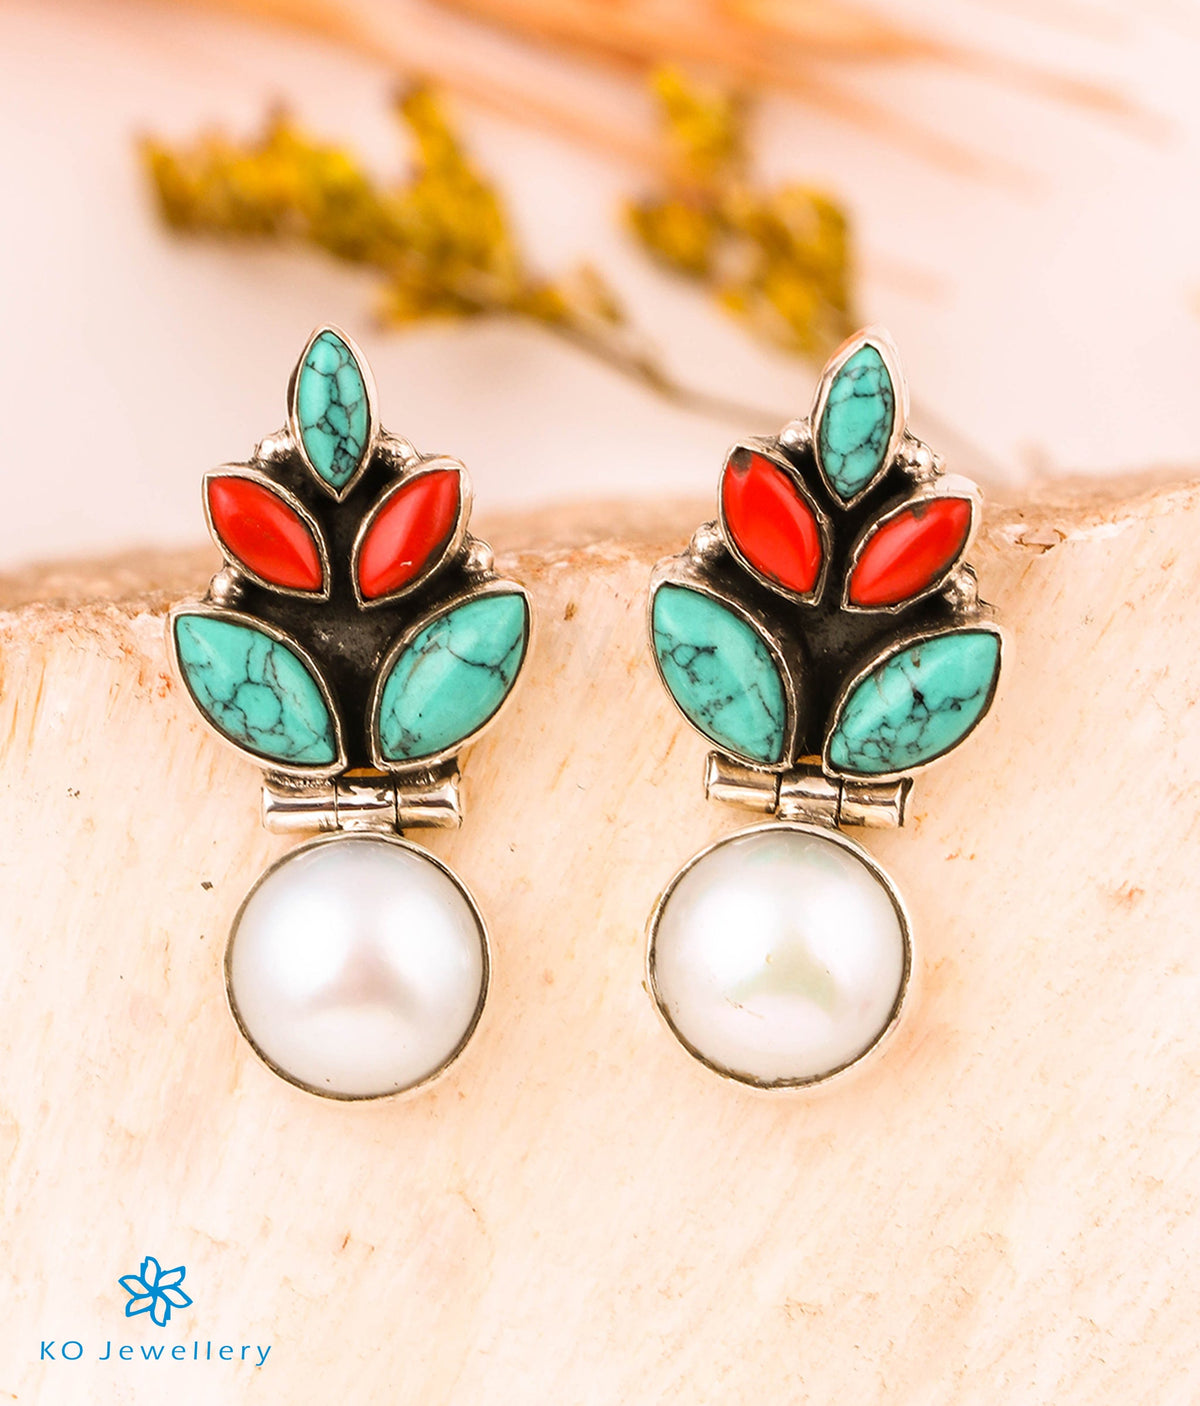 Bead Coral Earrings  Fair trade jewelry Trade bead earrings Coral  earrings